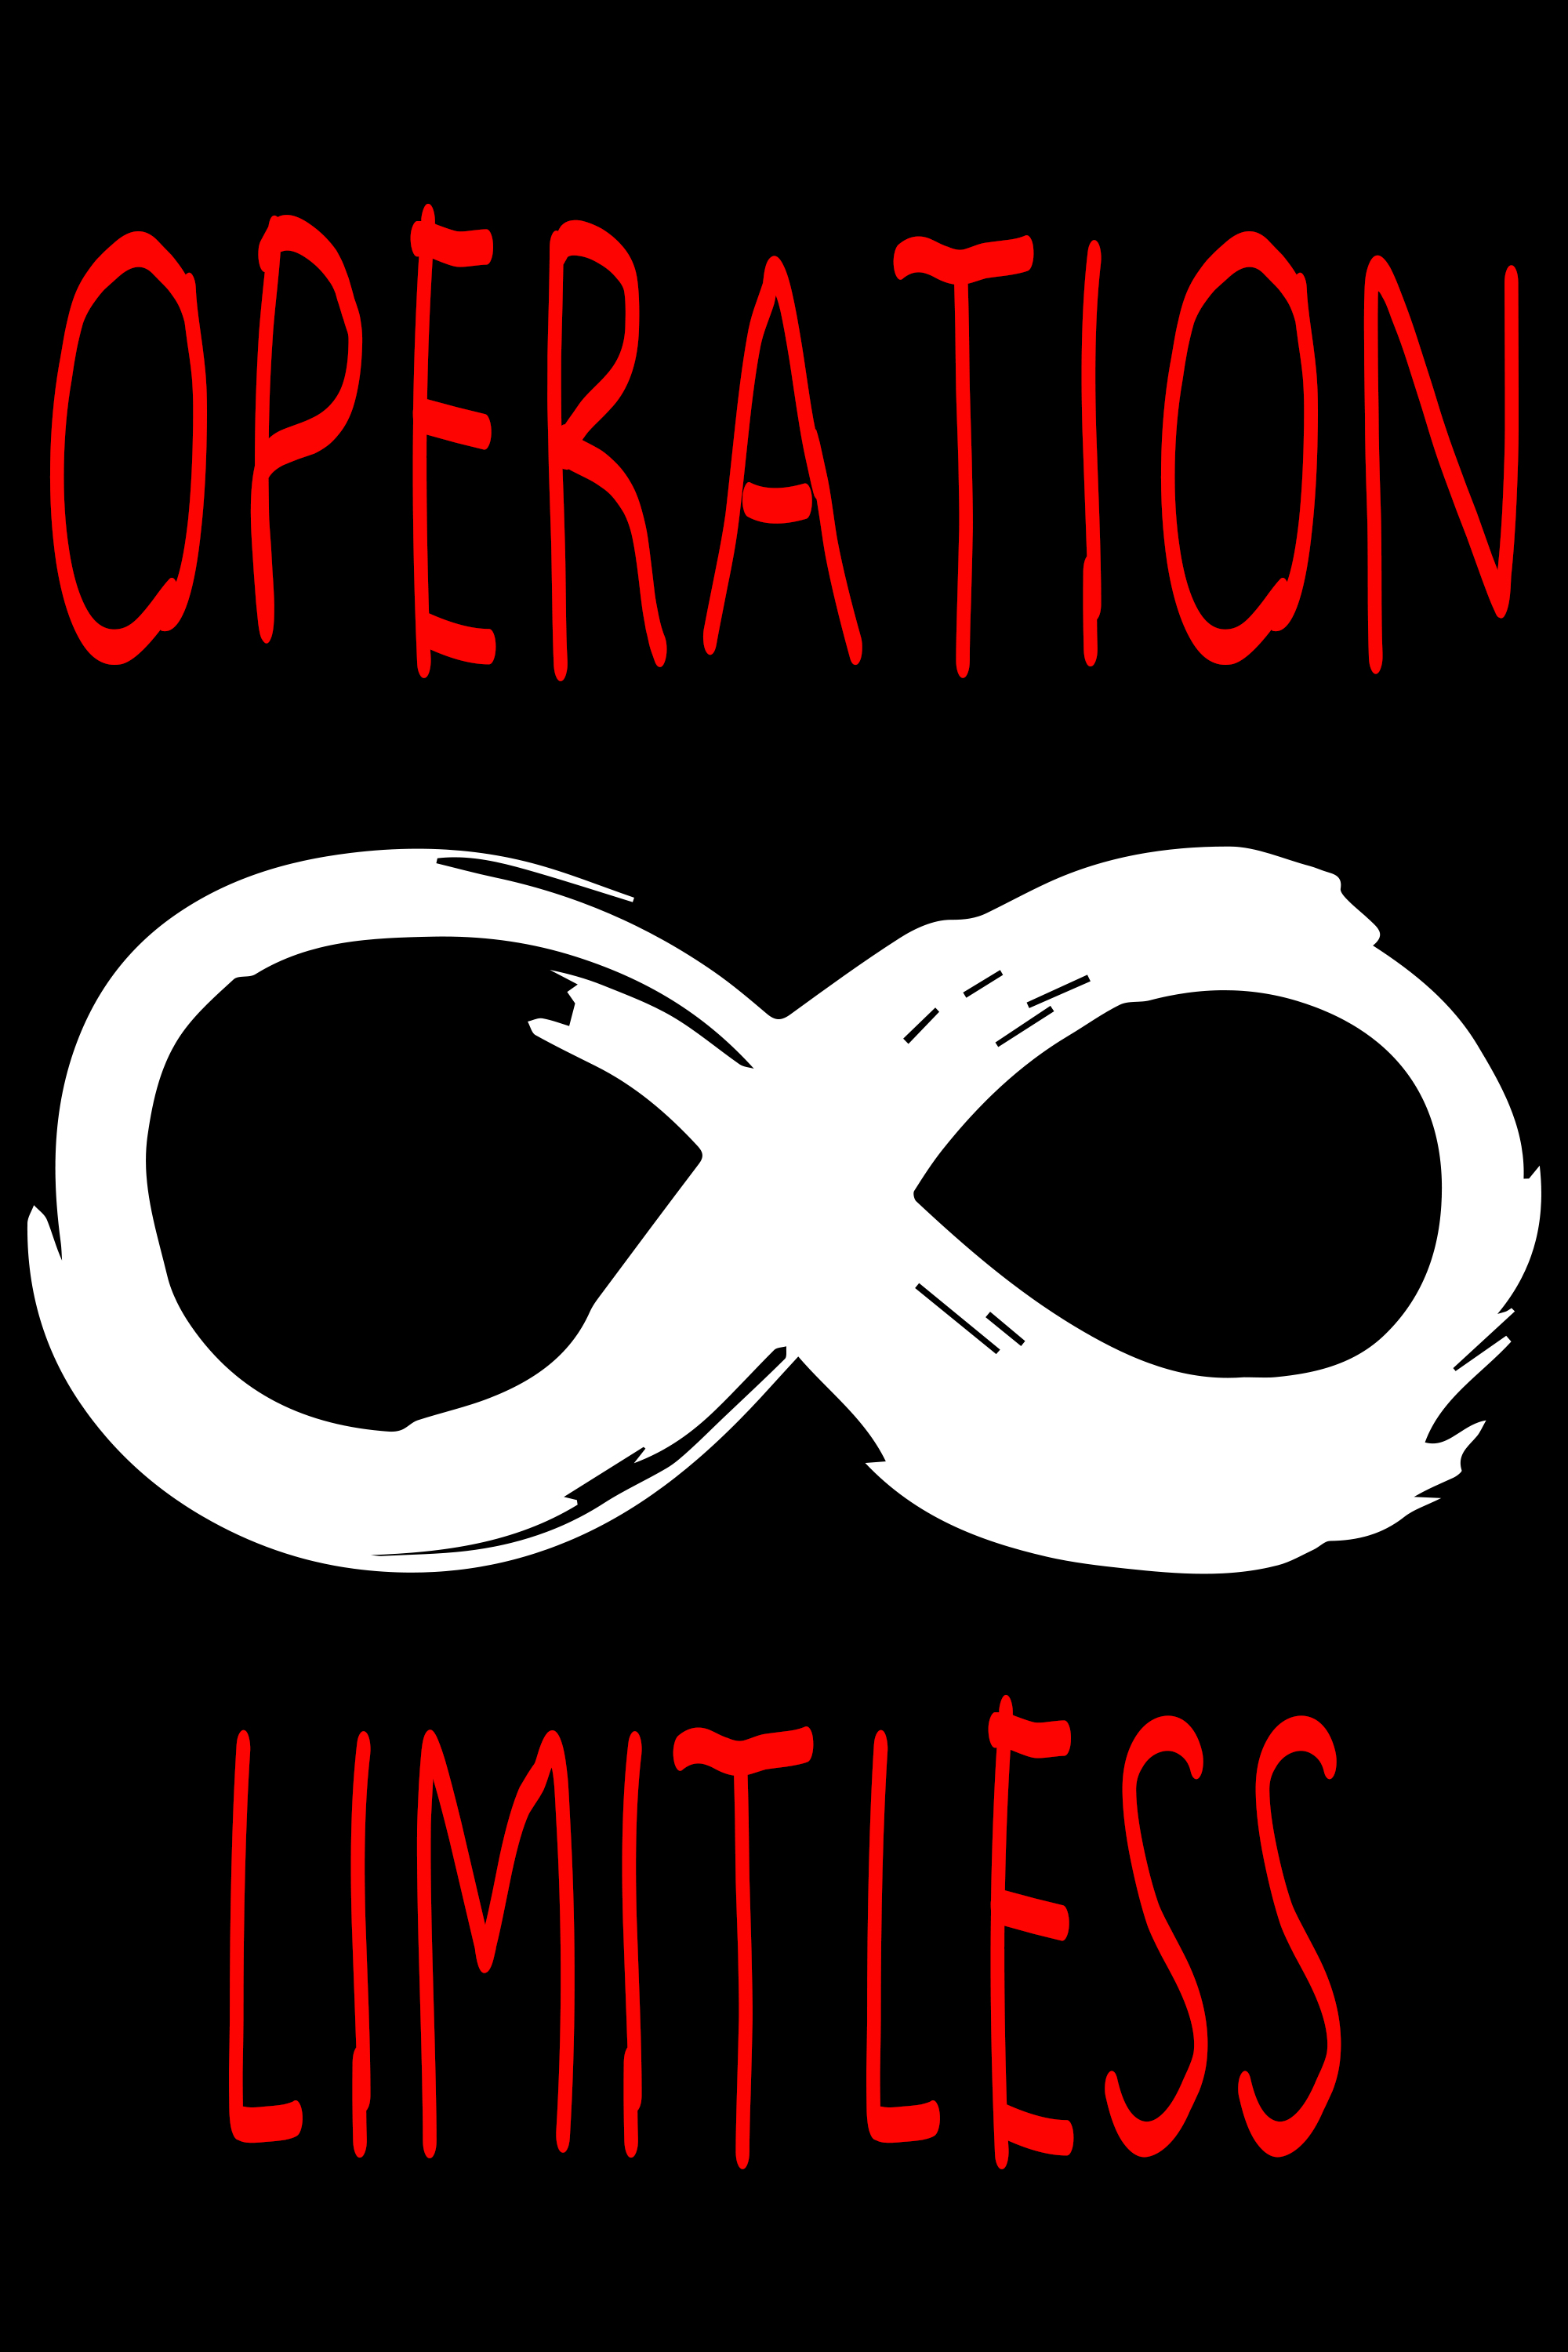 Operation Limitless